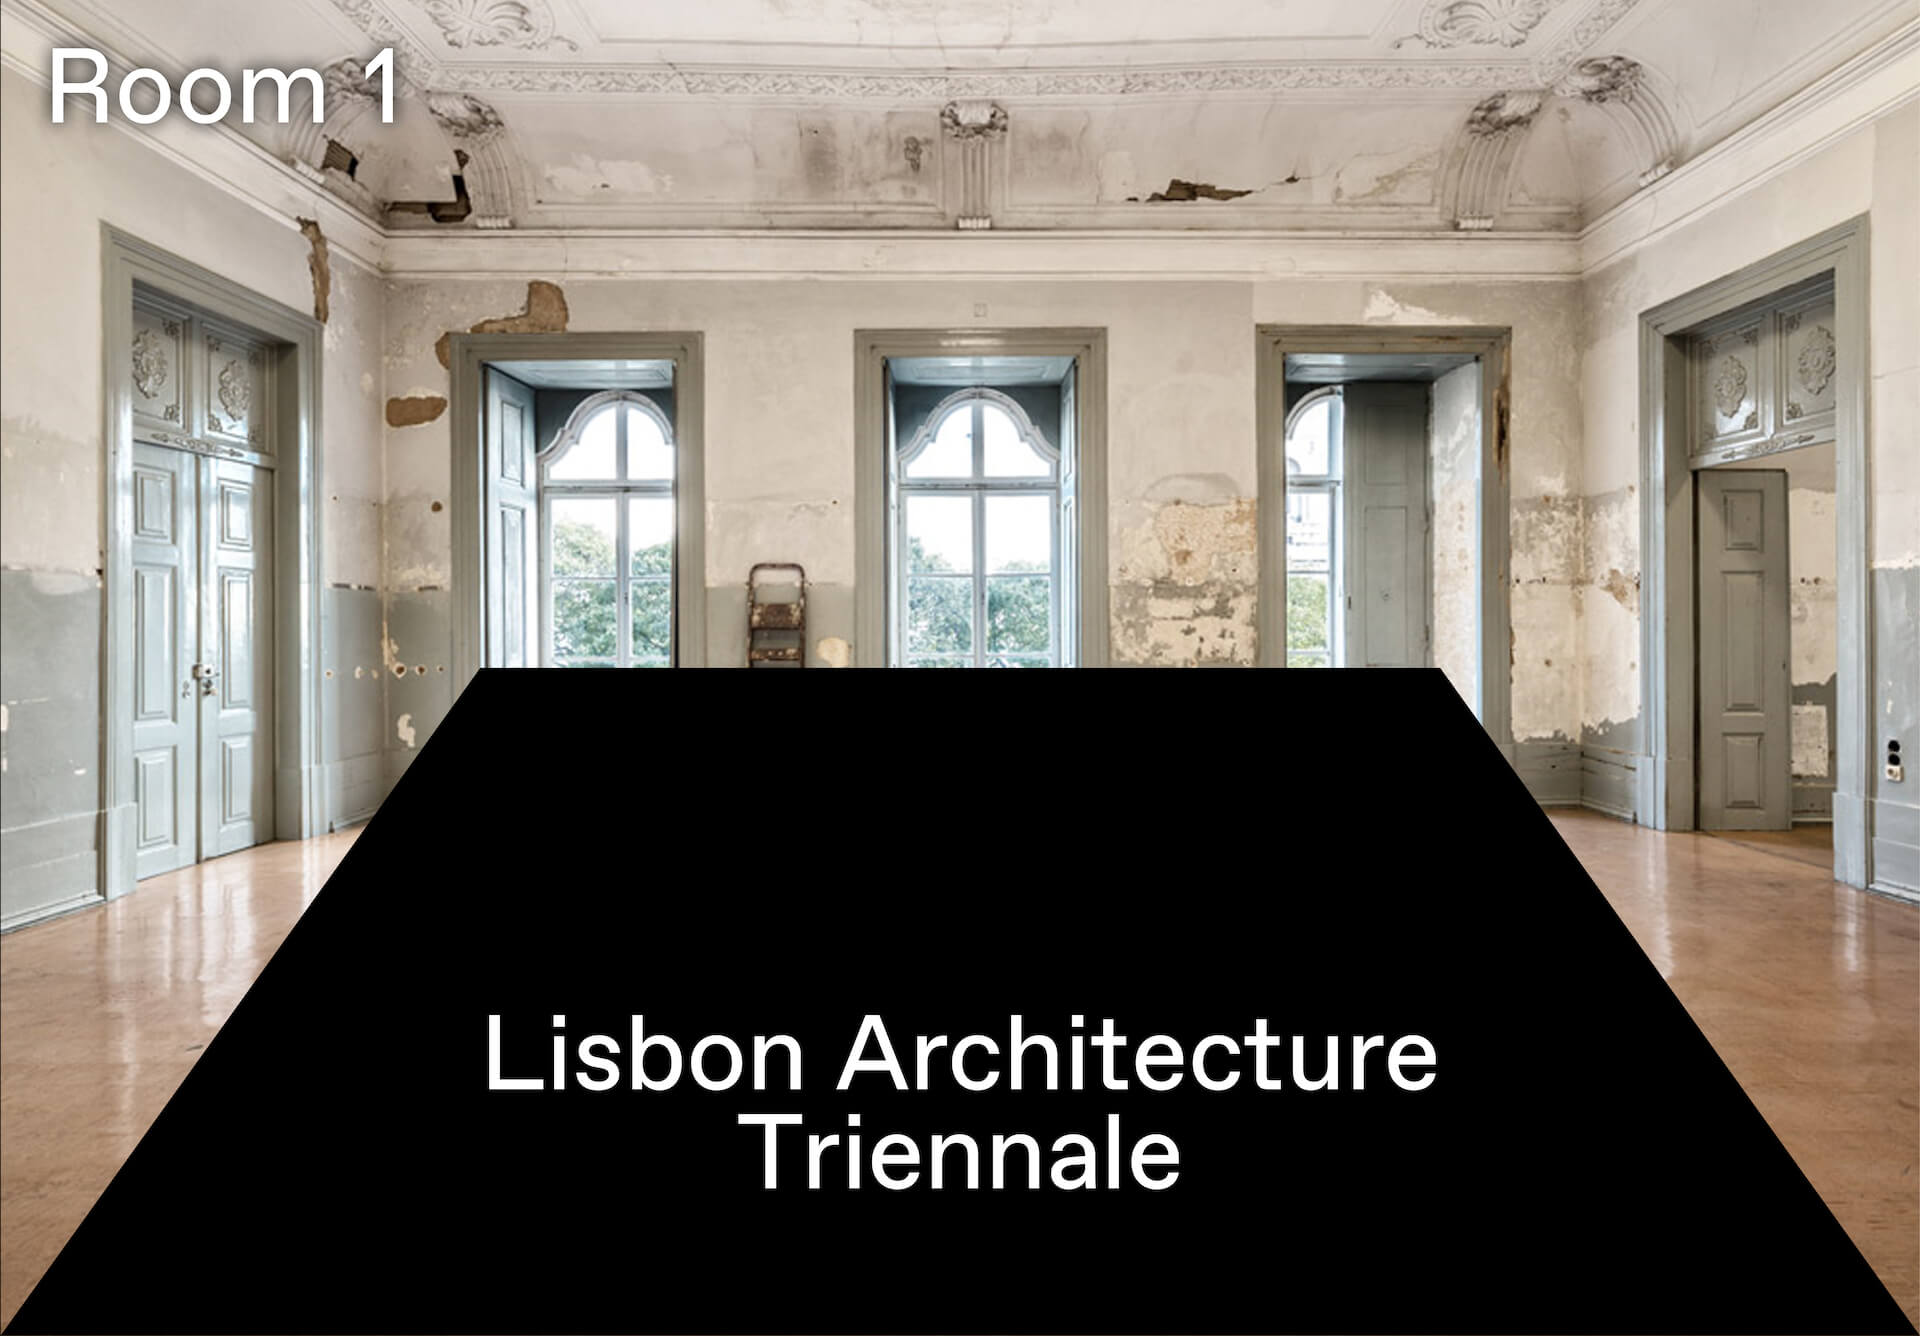 Future Architecture Rooms - Lisbon Architecture Triennale